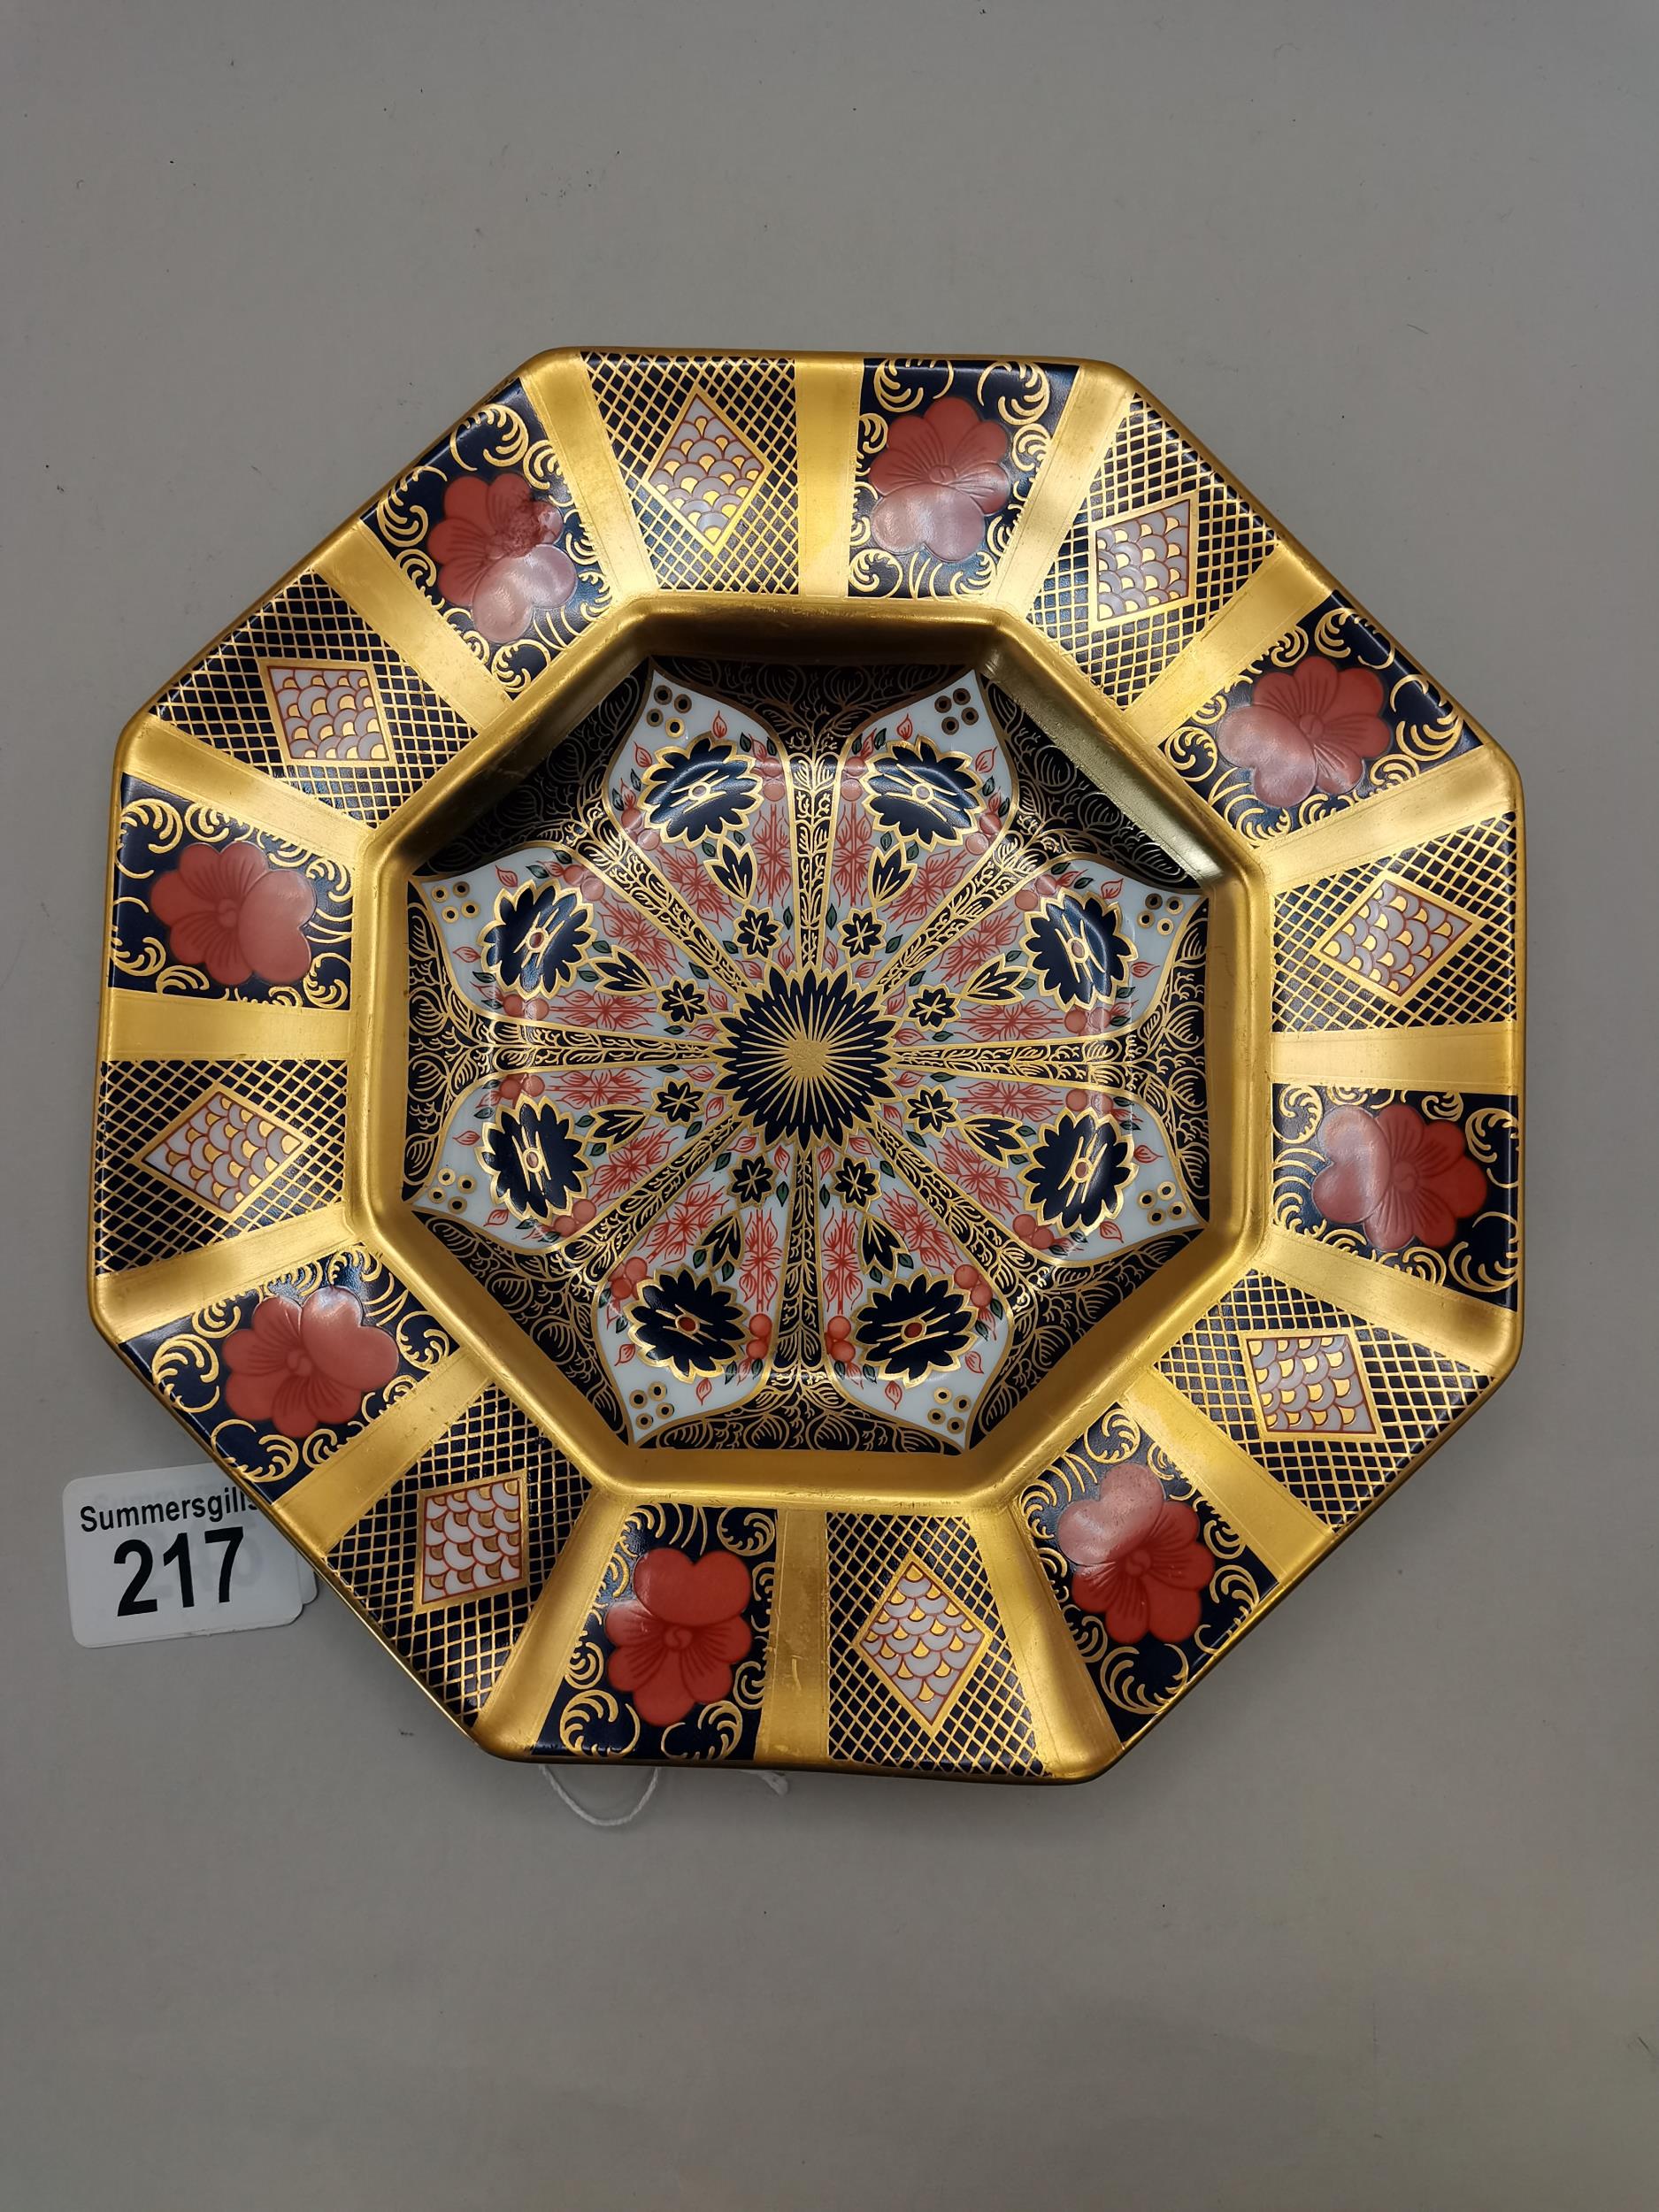 Octagonal Crown Derby Plate - 1128